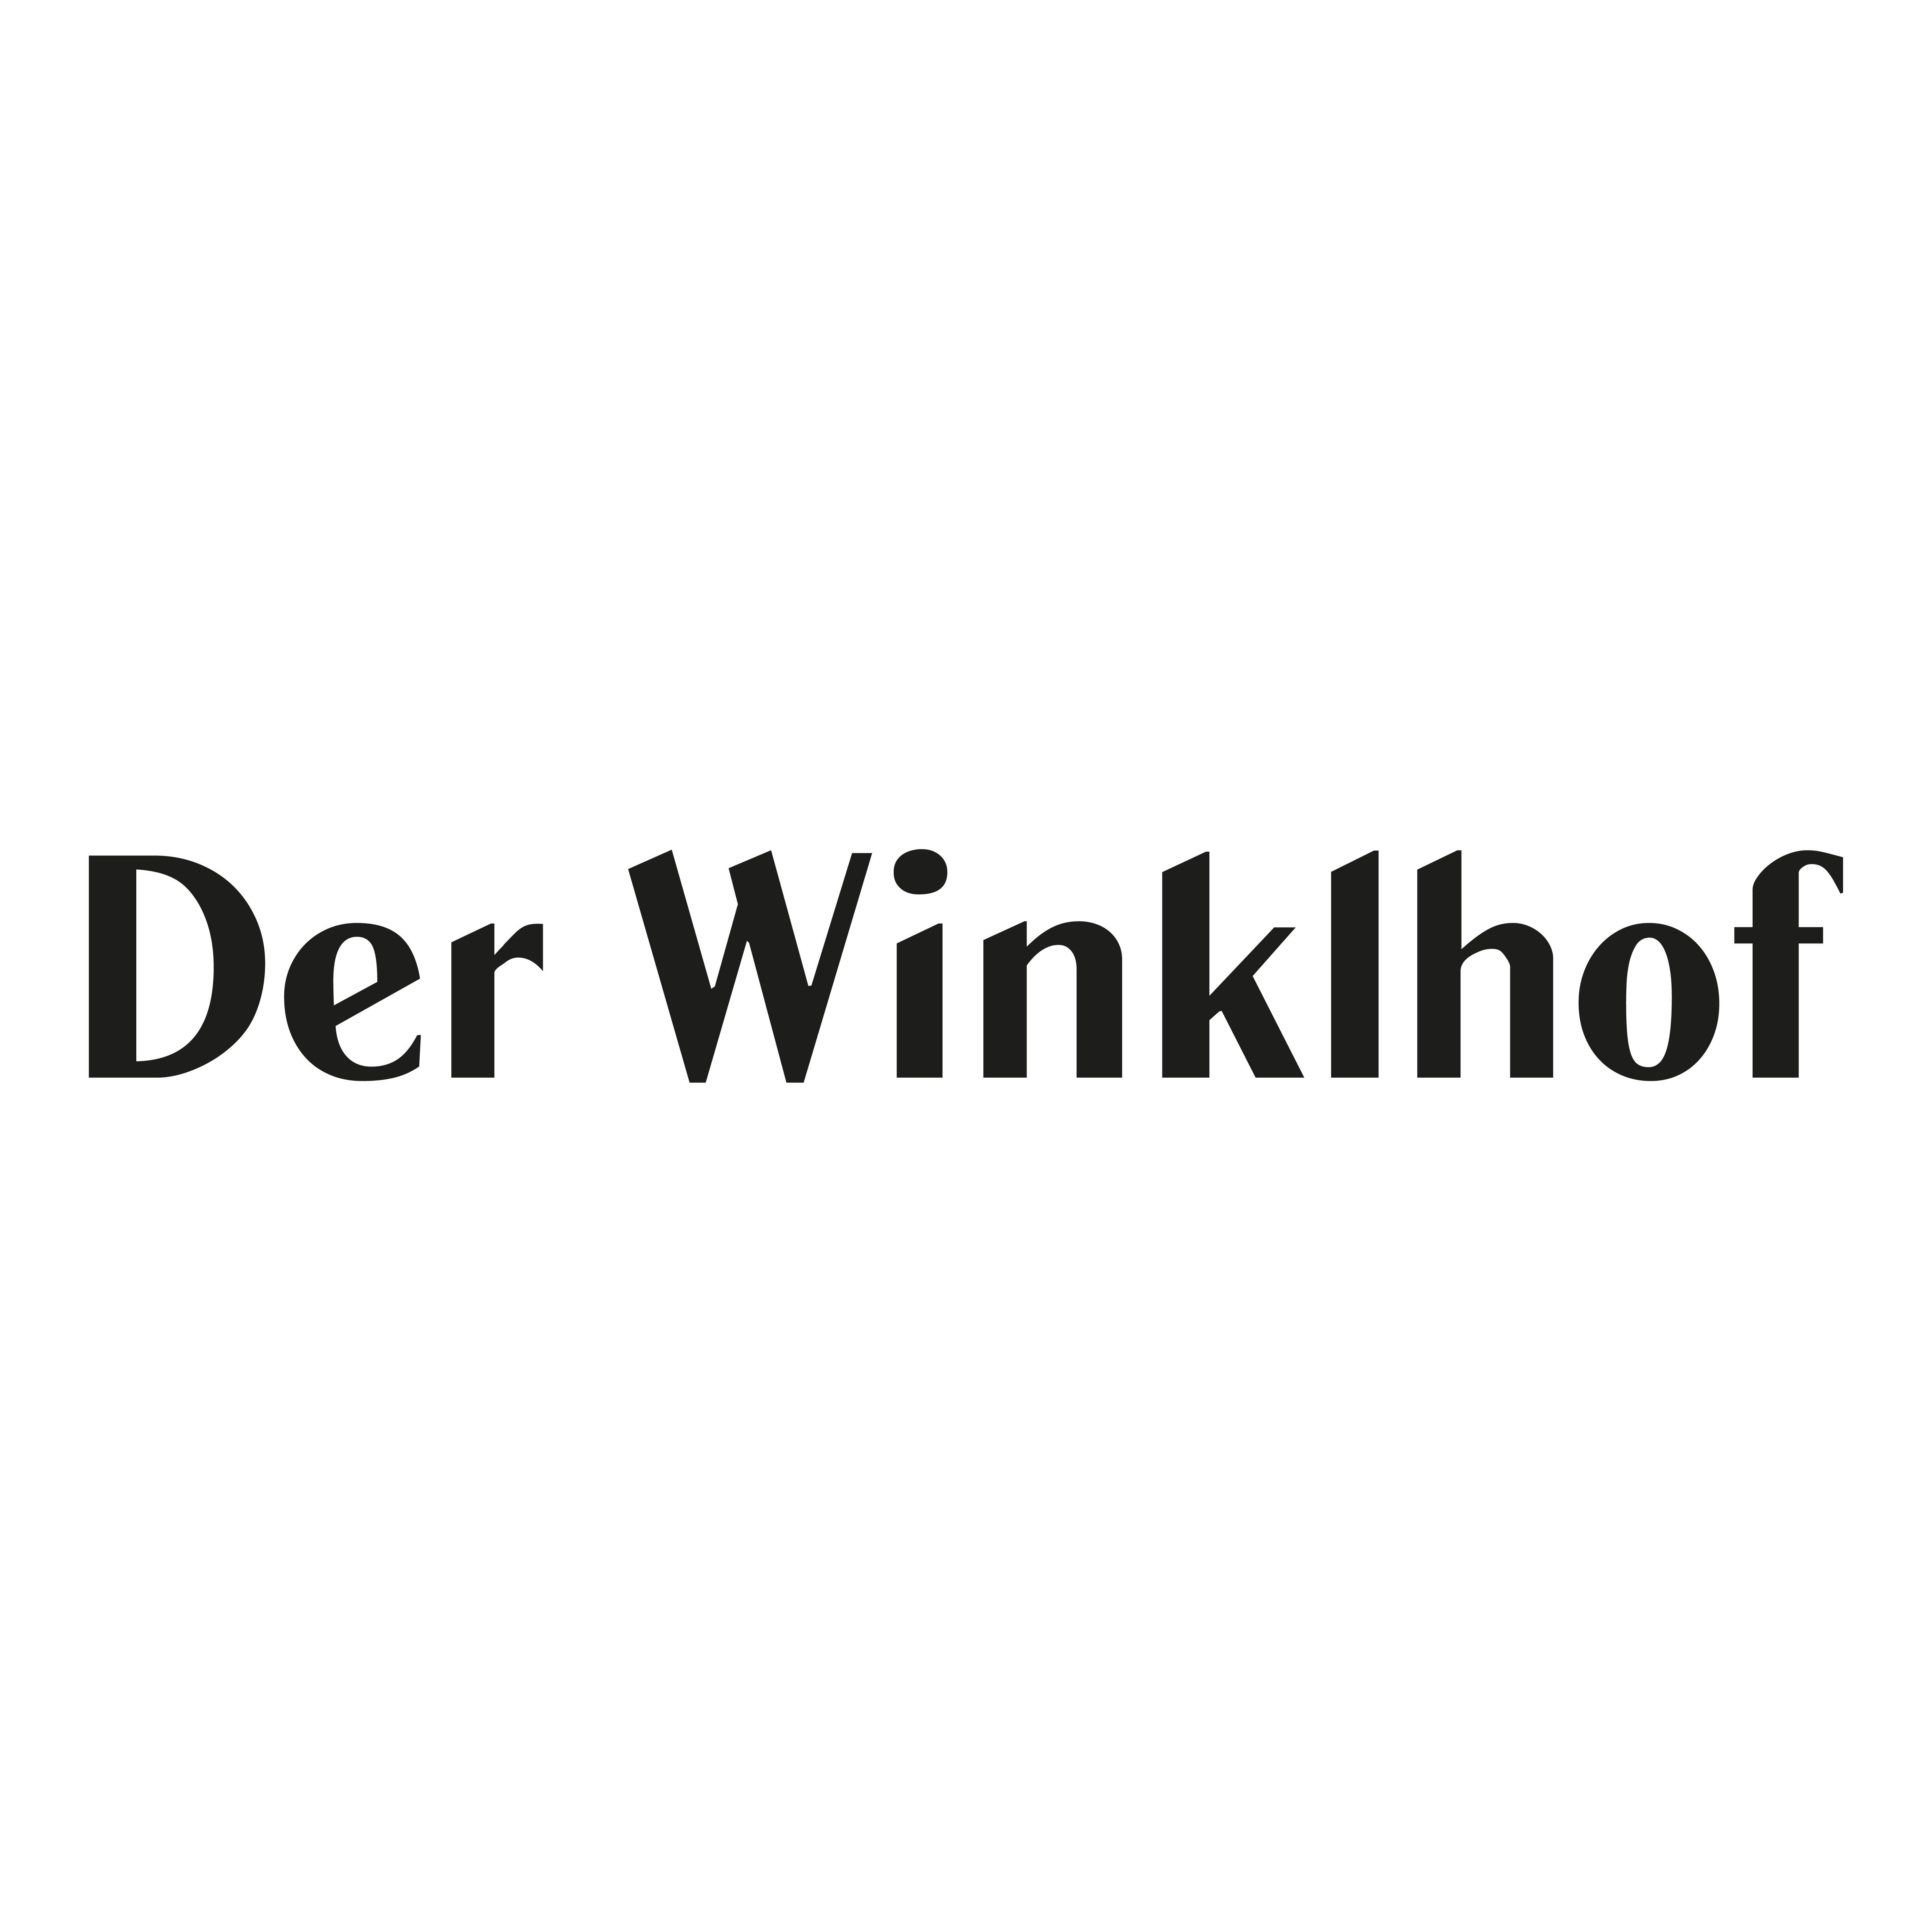 Hotel Garni Der Winklhof in Saalfelden Logo